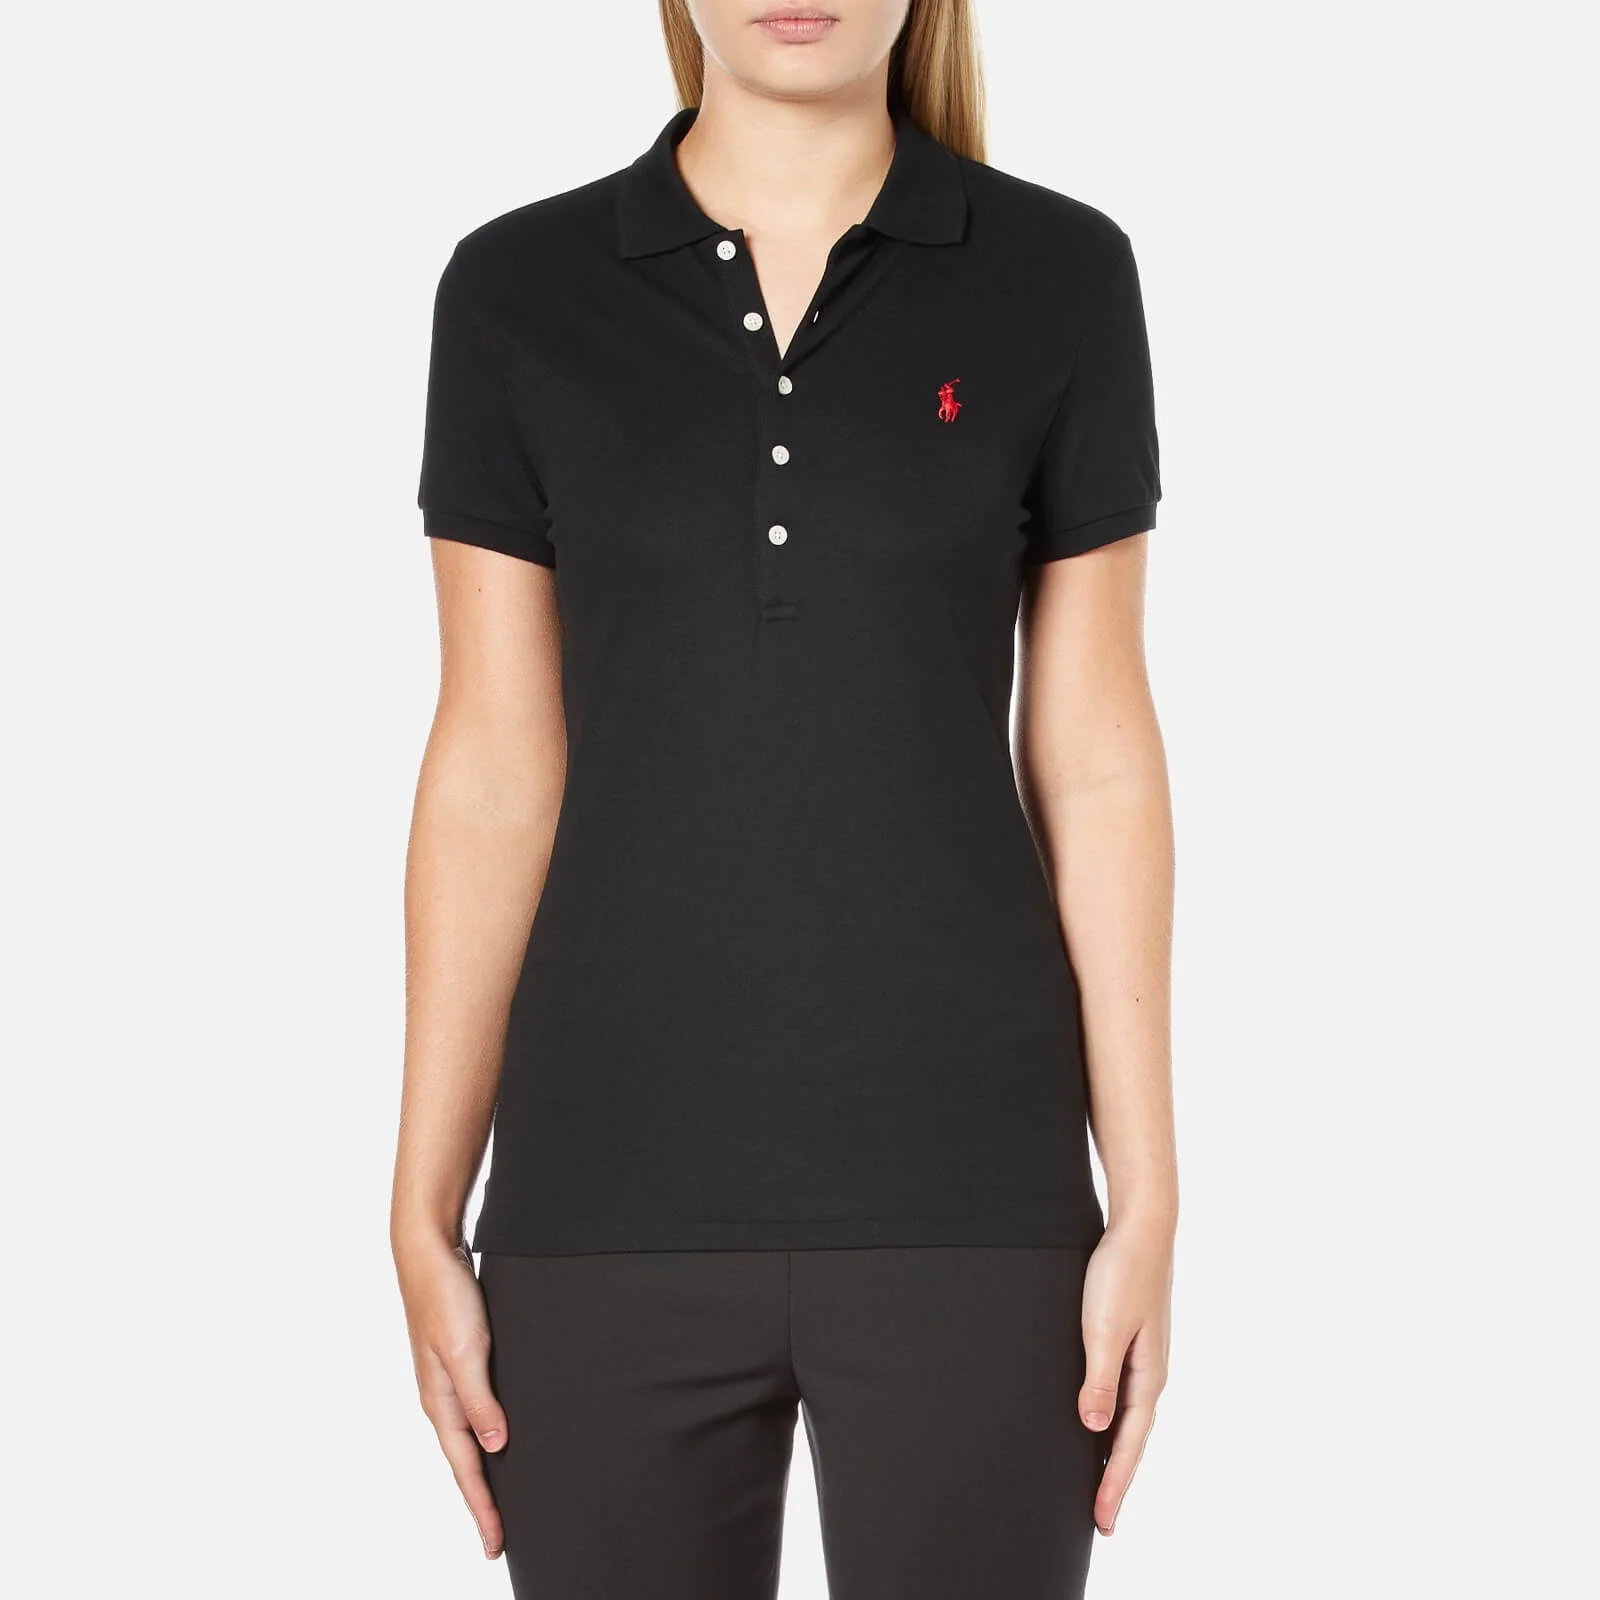 Polo Ralph Lauren Women's Julie Polo Shirt - Black Image 1